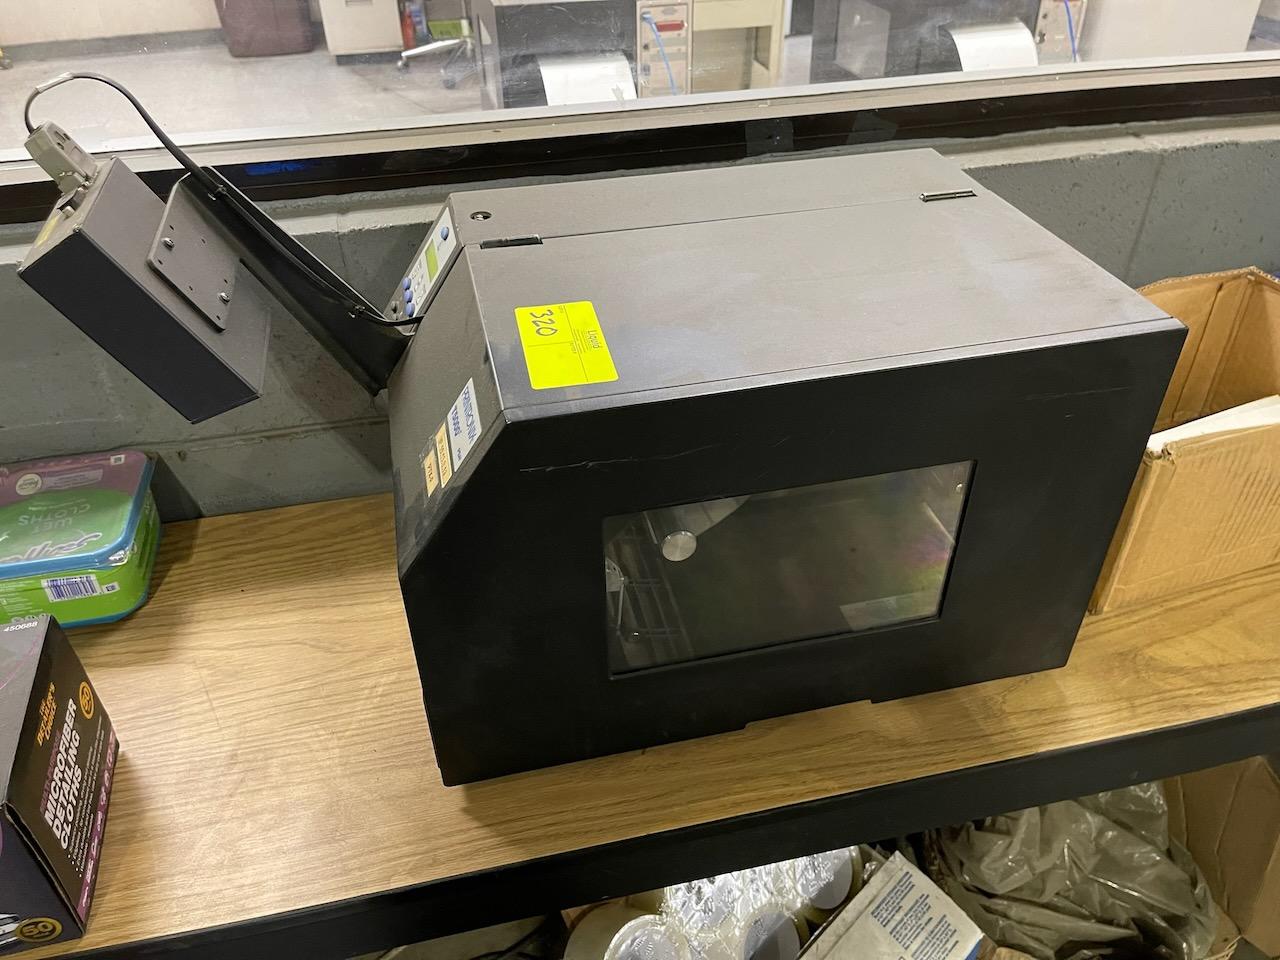 Printronix Thermal Label Printer - Model SL/T5R